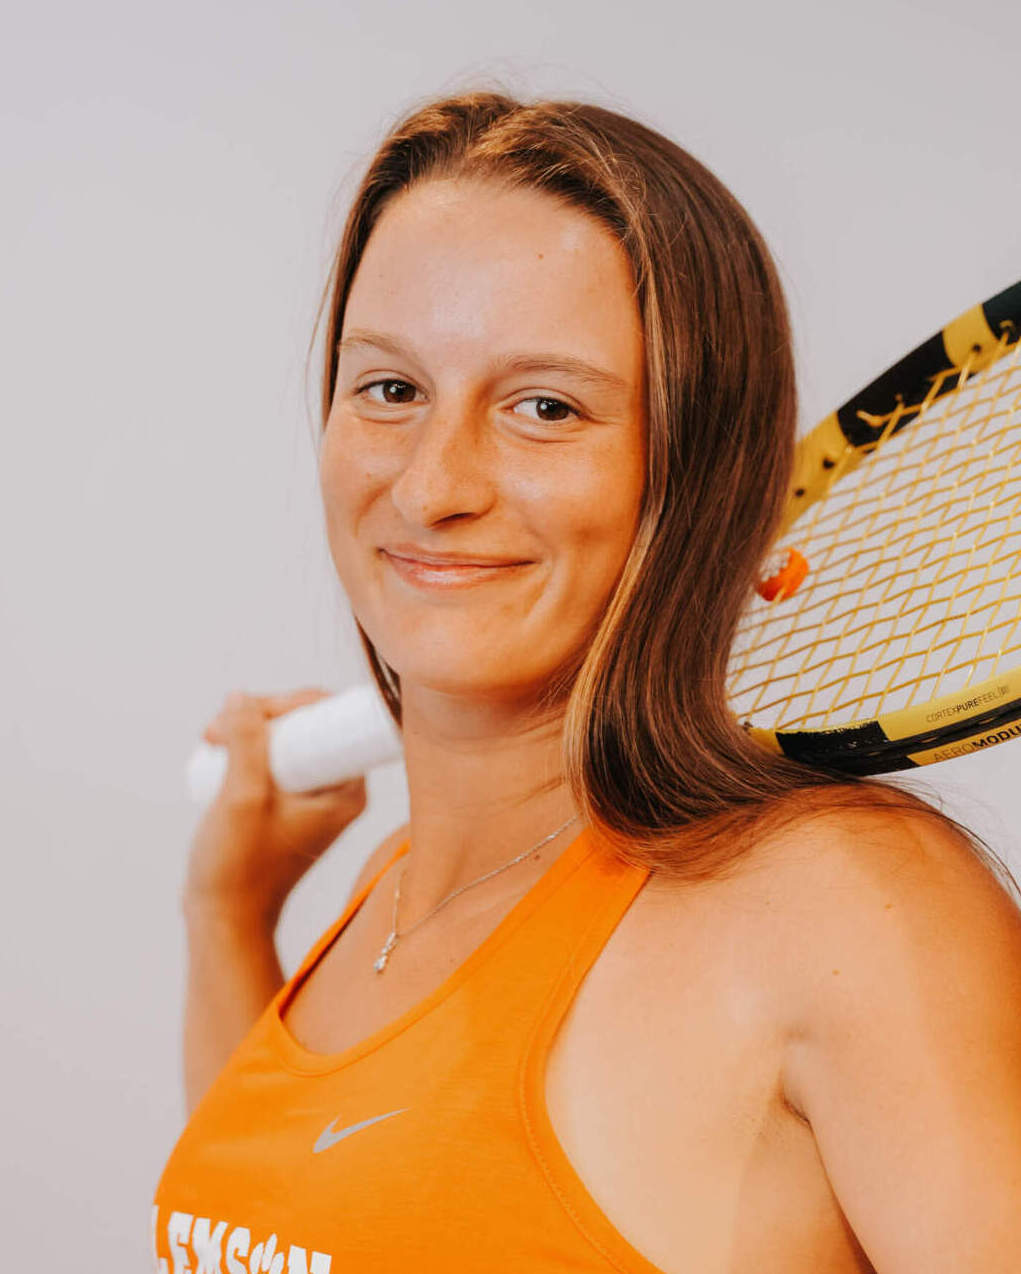 Amelie Smejkalova - Women's Tennis - Clemson University Athletics